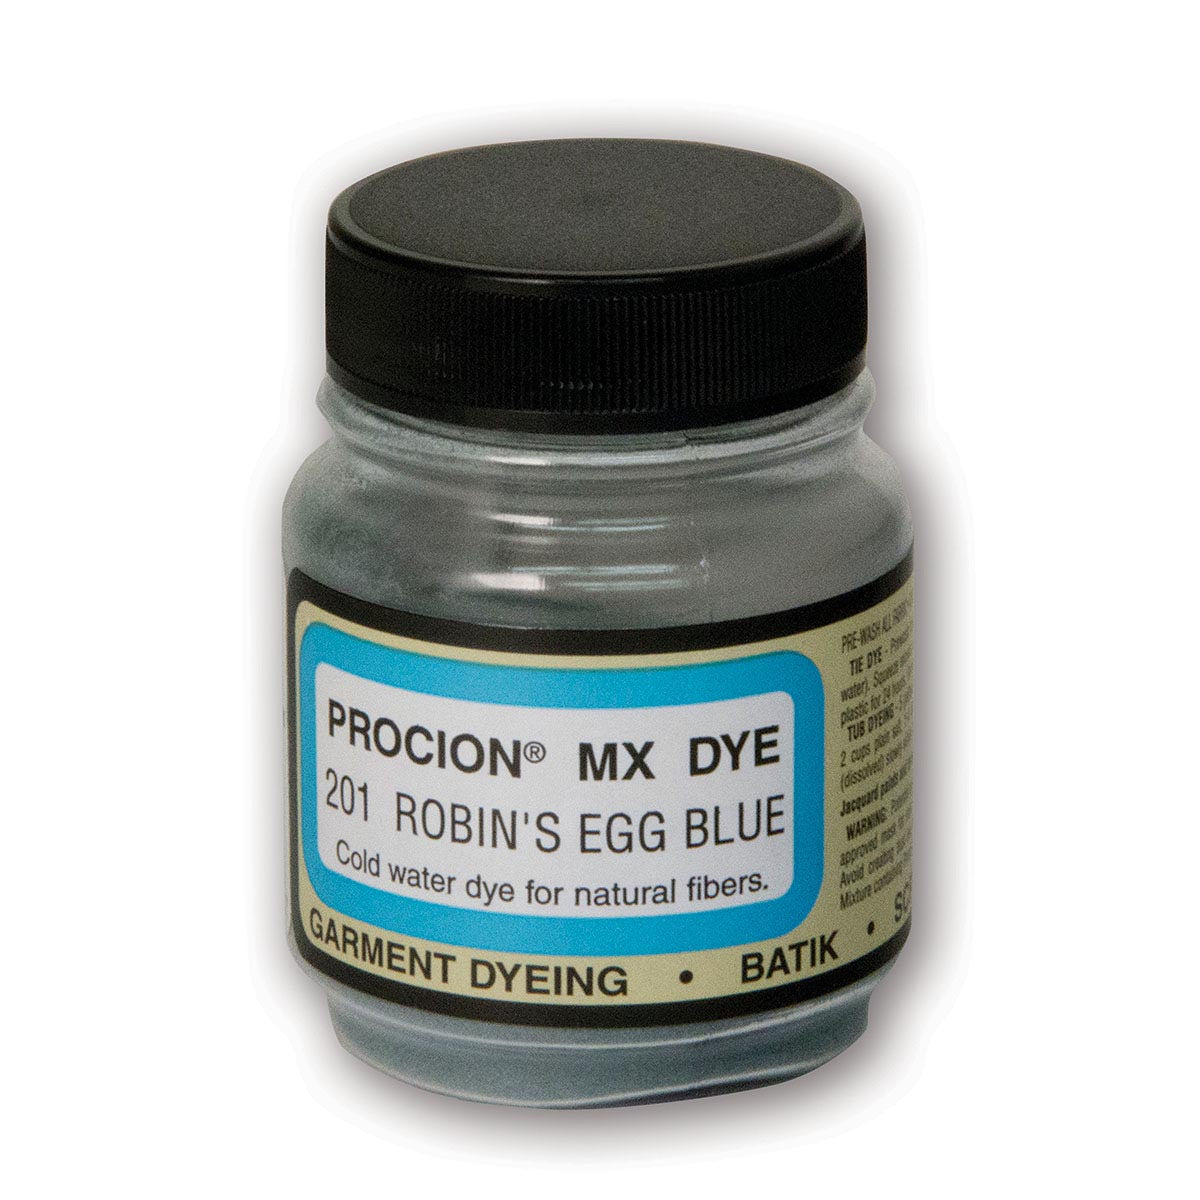 Jacquard - Procion MX Dye - Fabric Textile - Robins Egg Blue 201